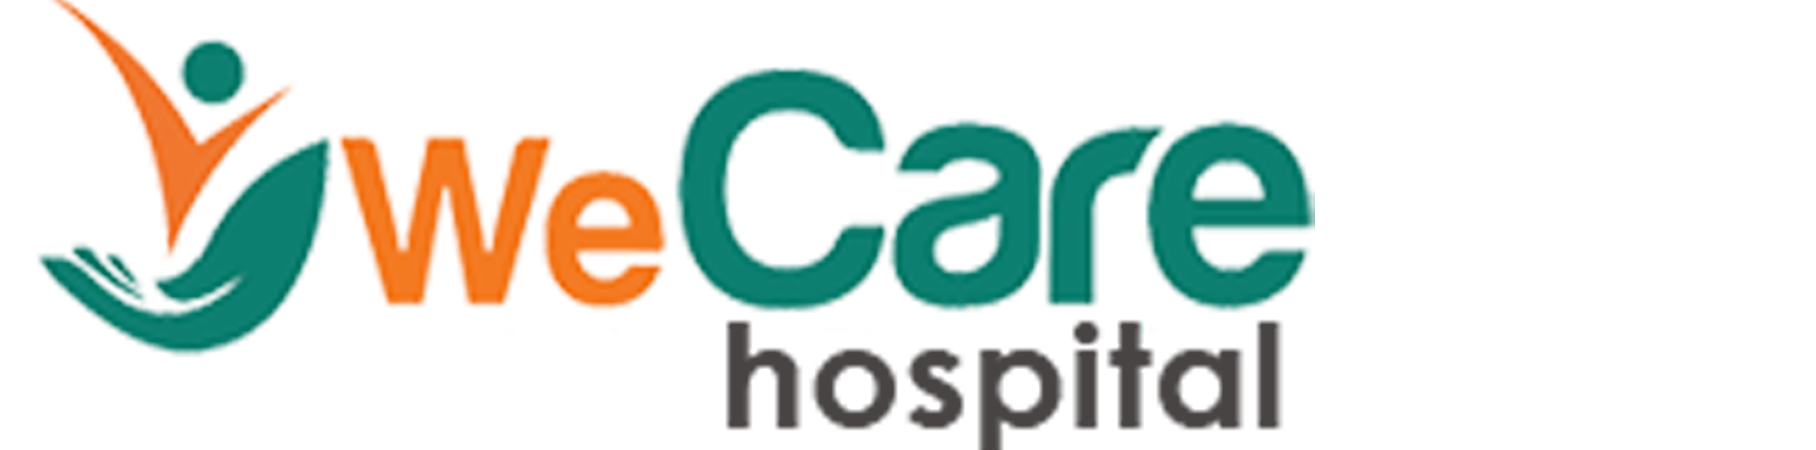 We Care Hospital - Logo